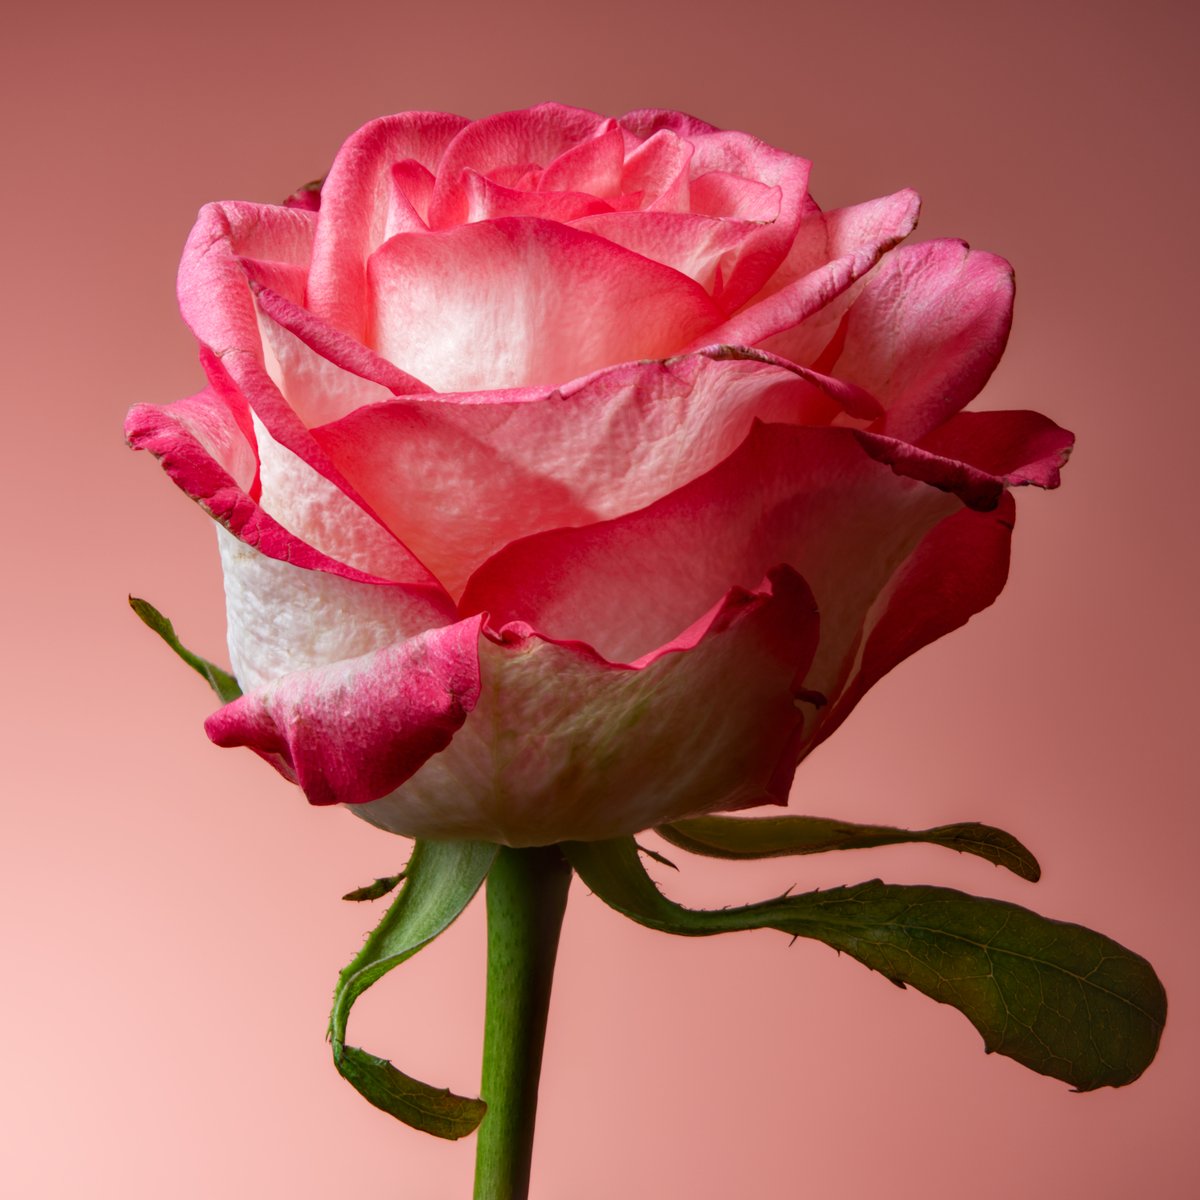 Flower photo of the day. Pink Rose. #macro #flowers #bloemenfotografie #flowersandmacro #bloemen #blumen #fleurs #raw_flowers #snap_flowers